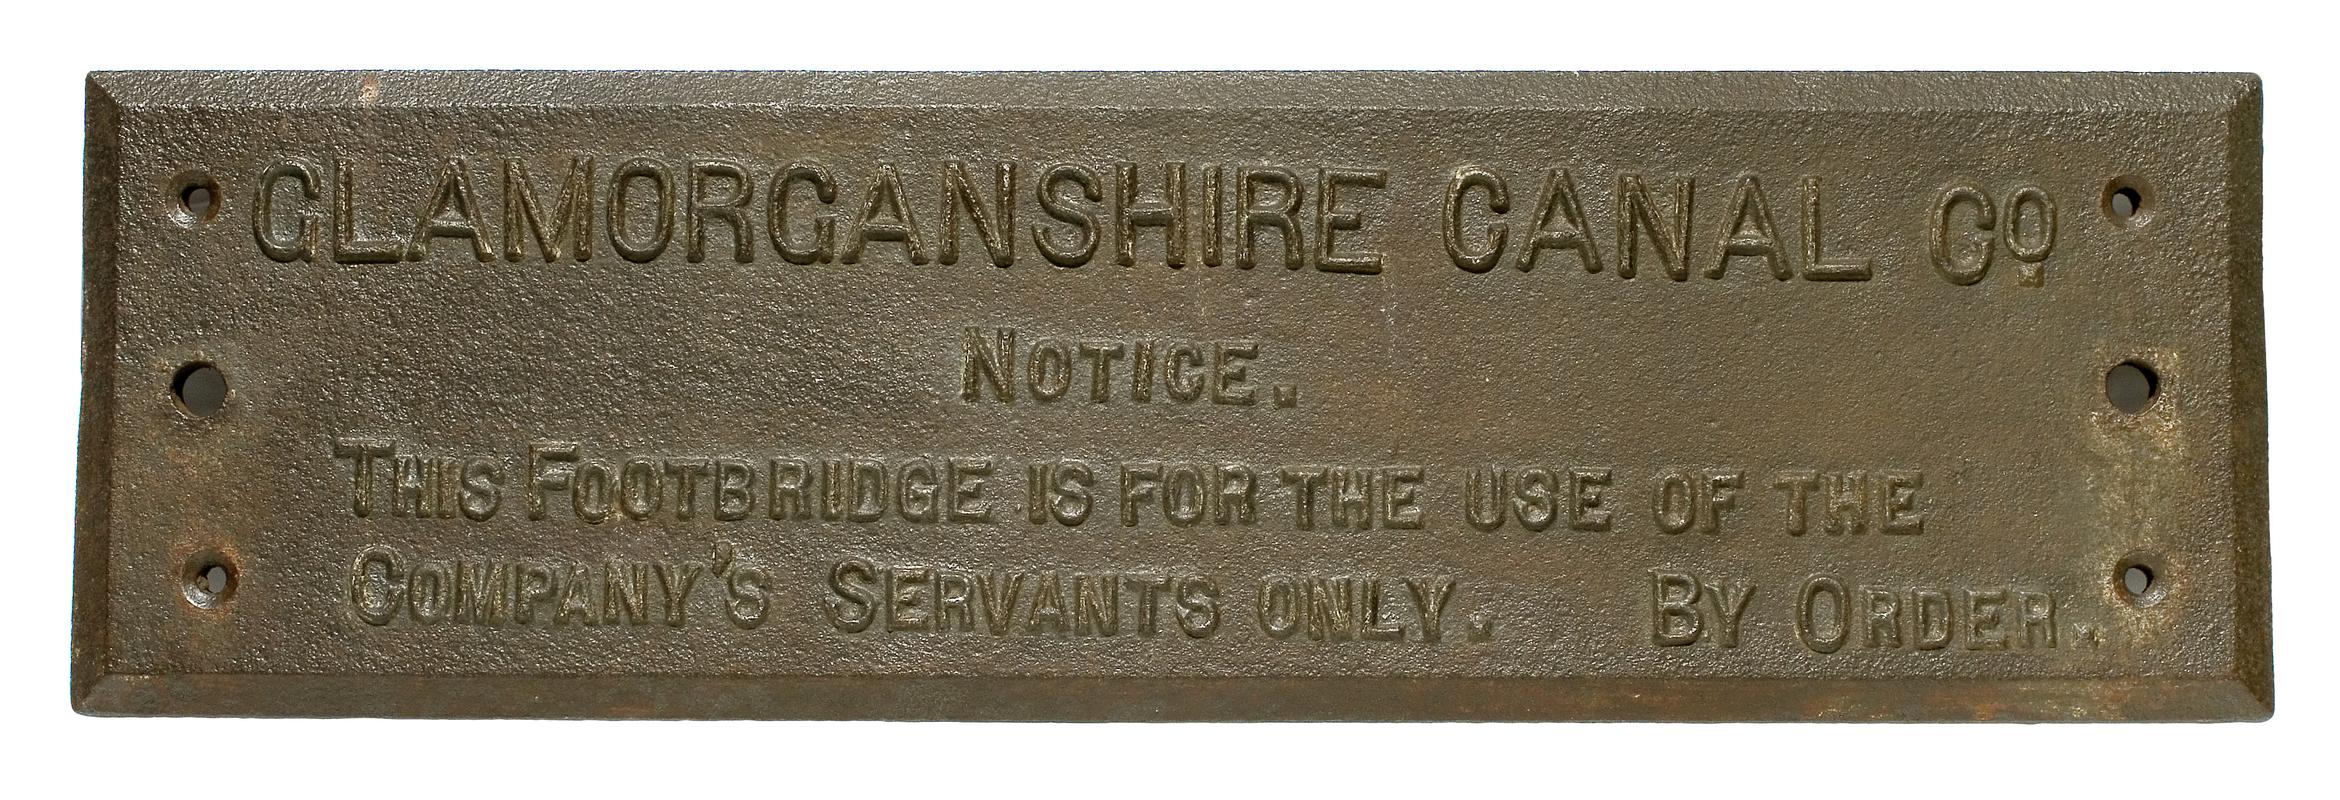 Glamorganshire Canal Co. cast iron notice